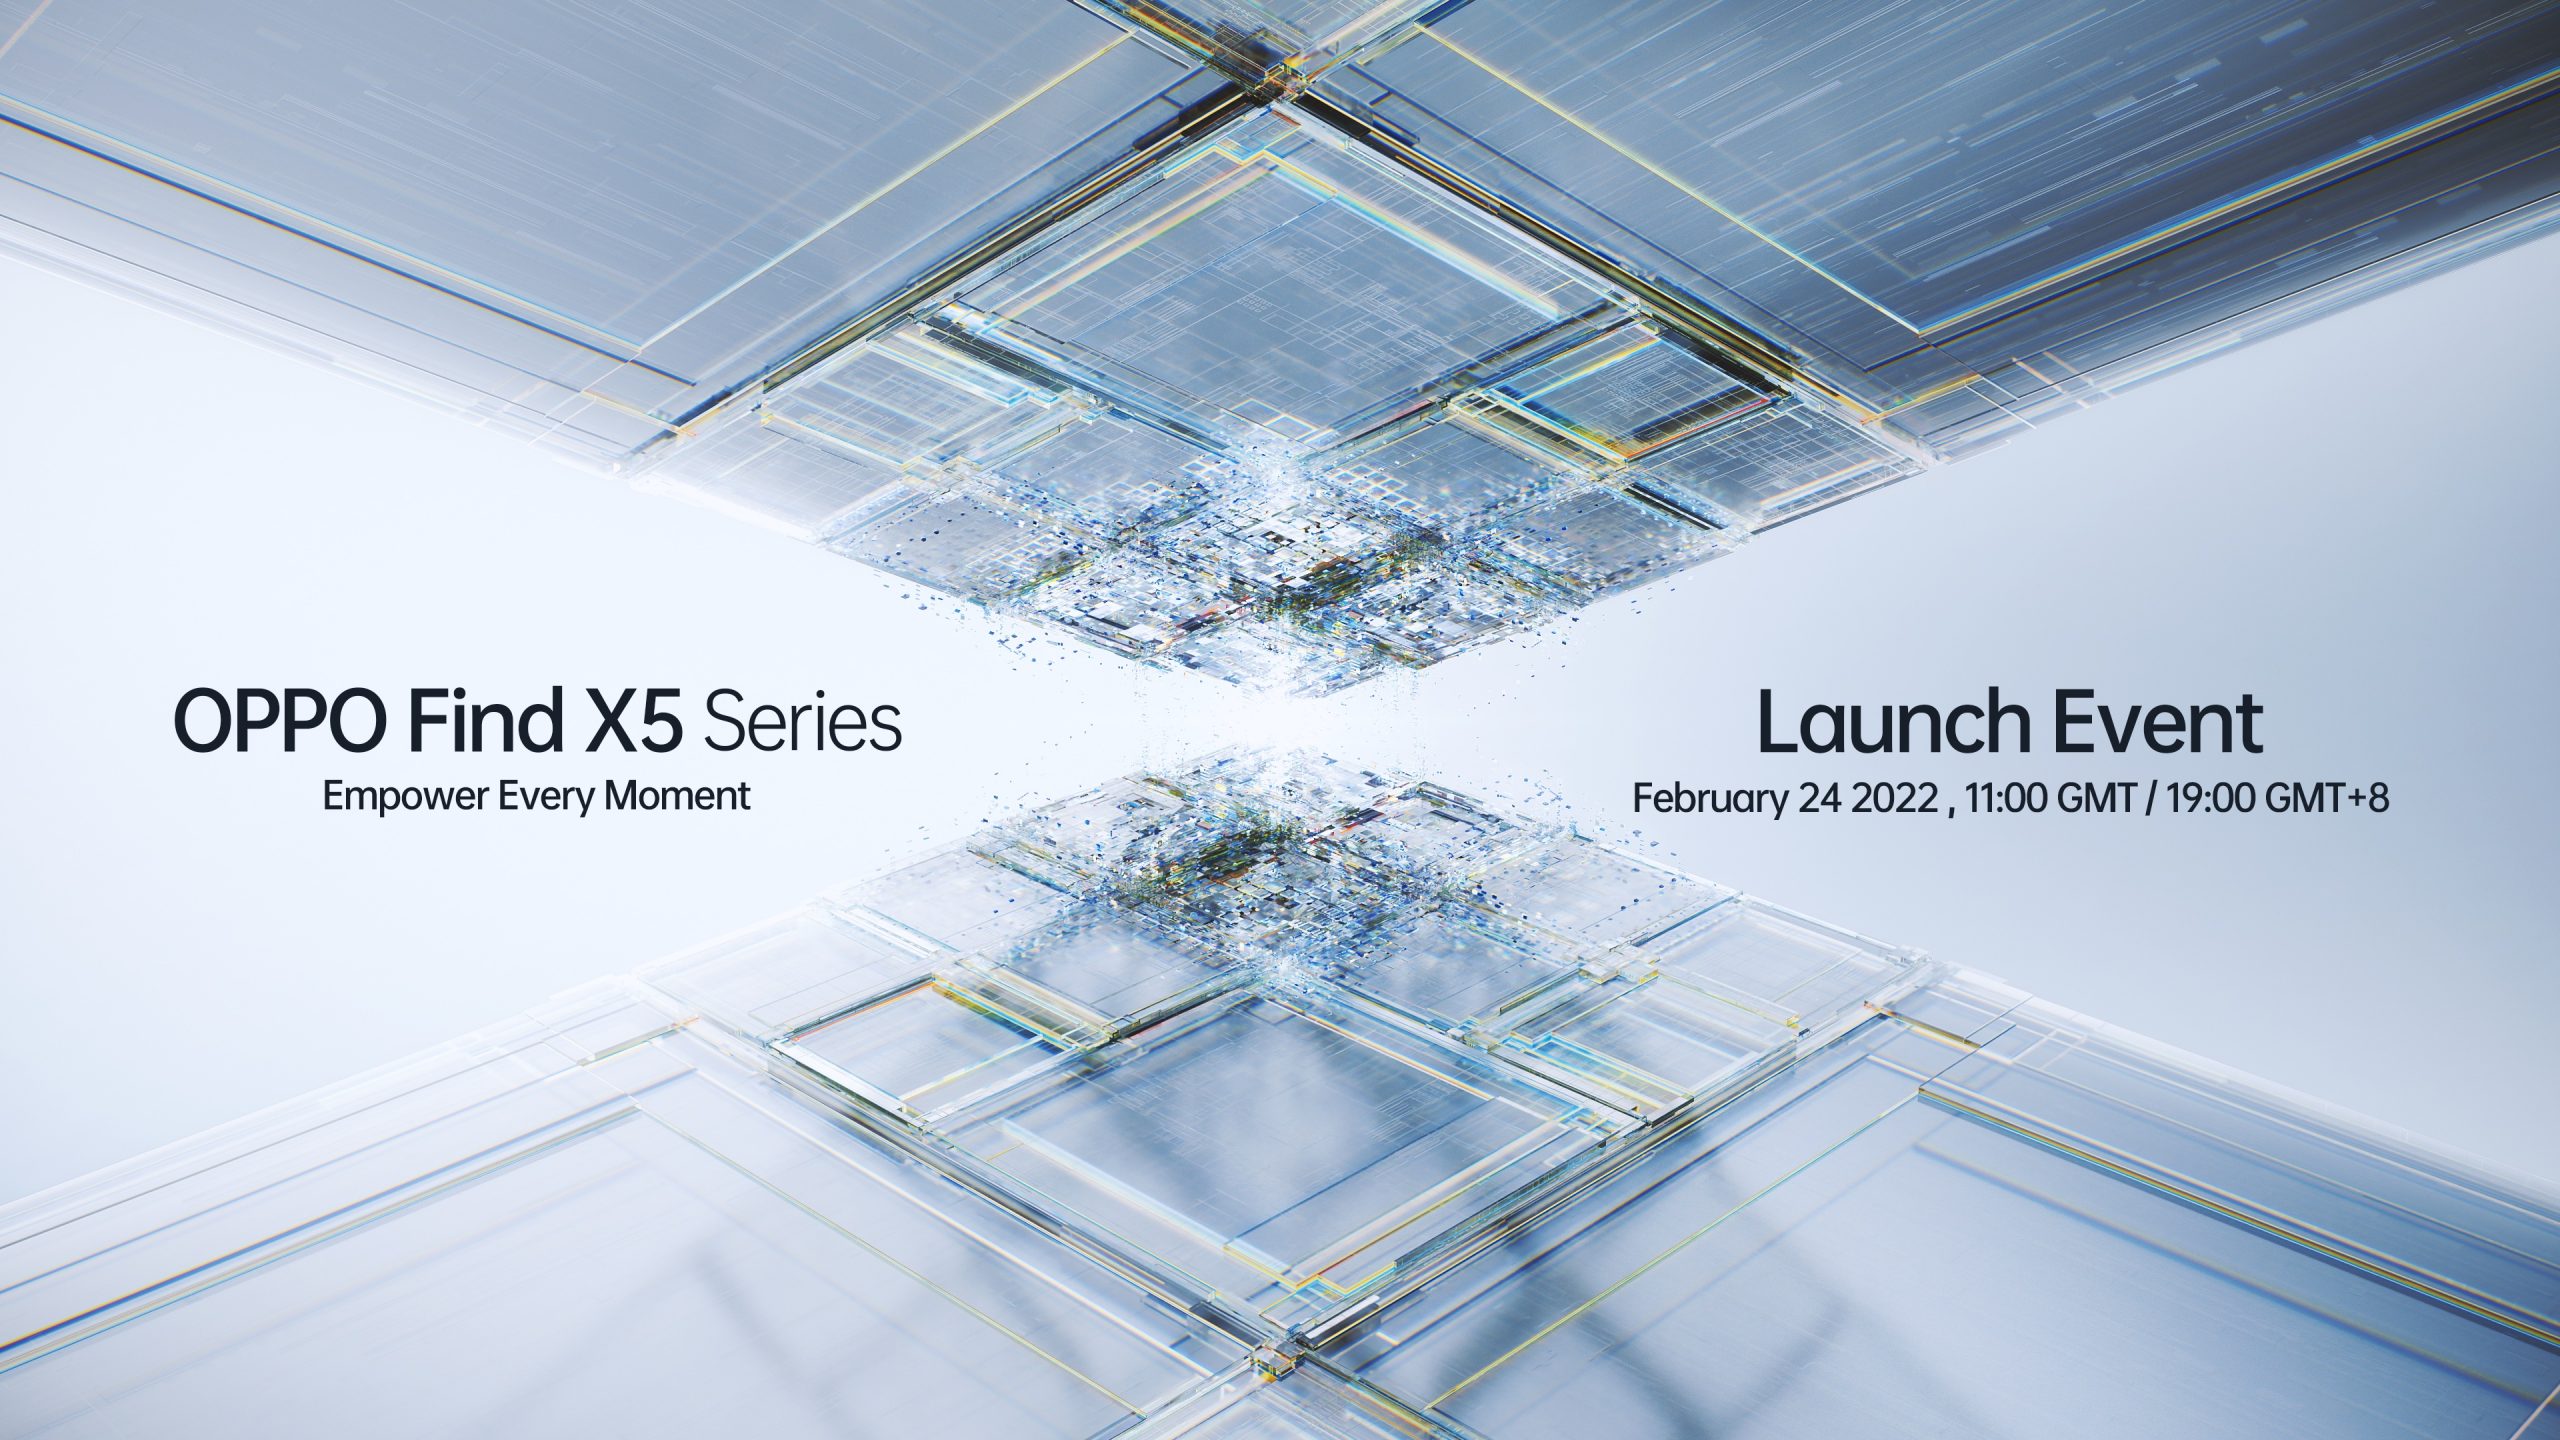 Trực tiếp sự kiện ra mắt OPPO Find X5 series